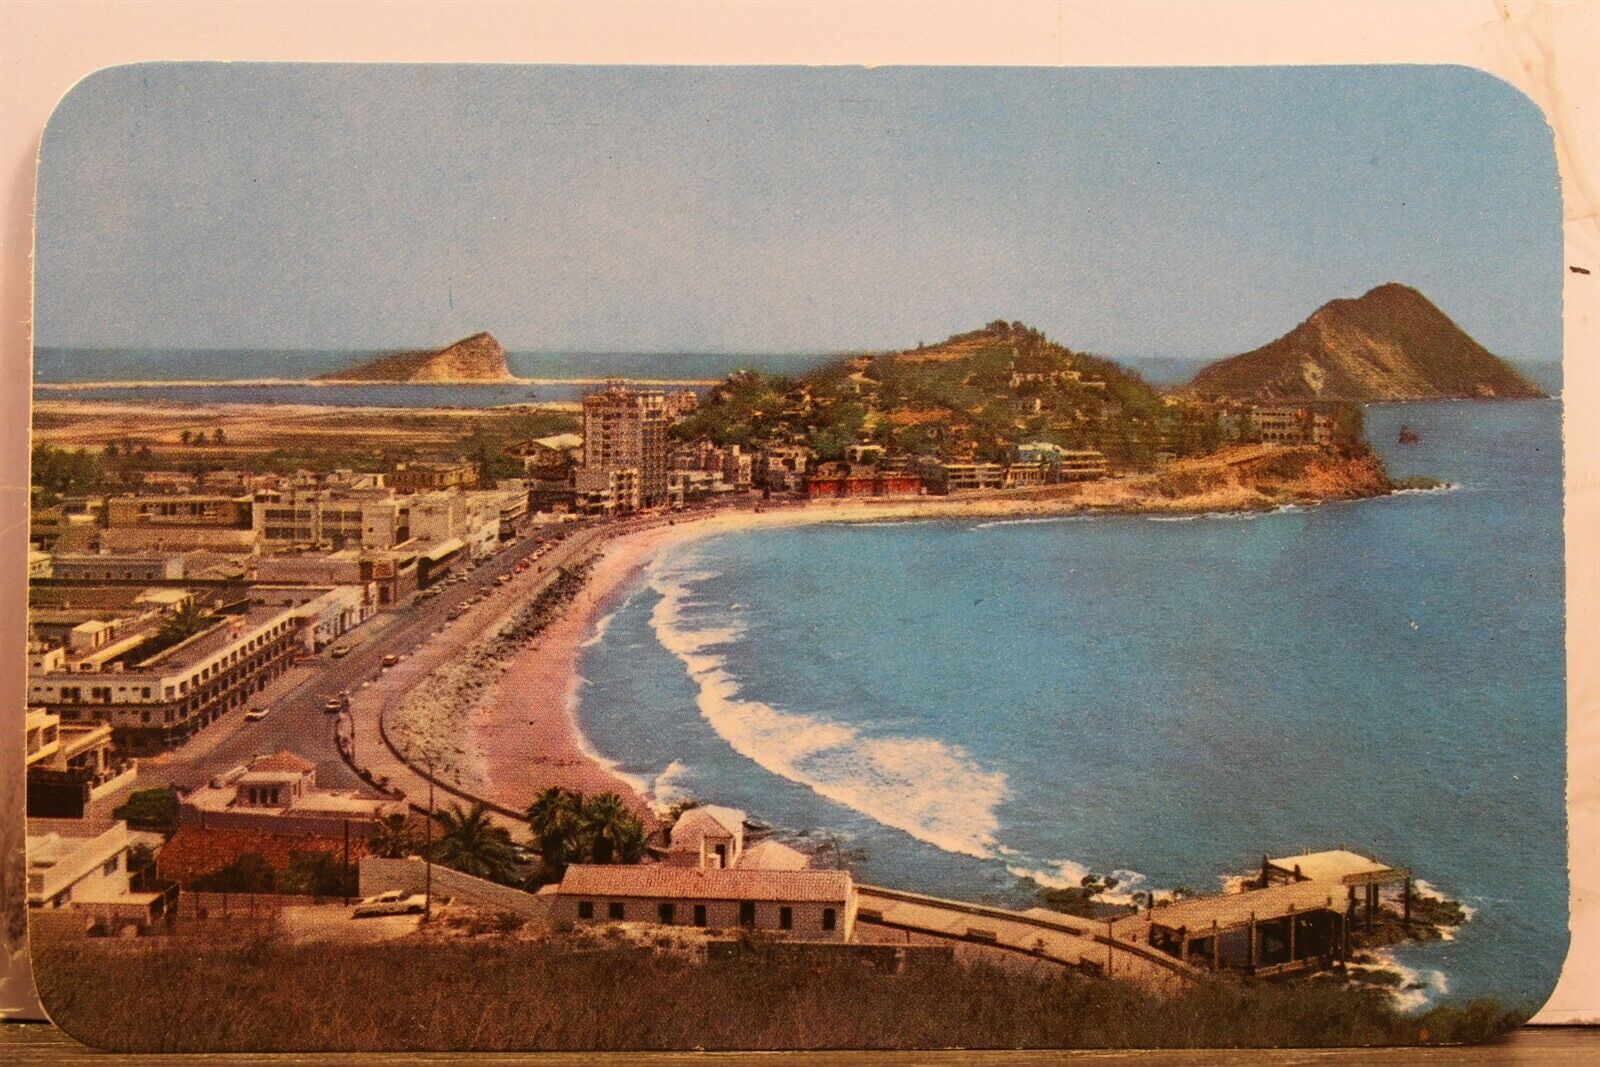 Mexico Mazatlán Sin Paseo Olas Altas Postcard Old Vintage Card View Standard Pc